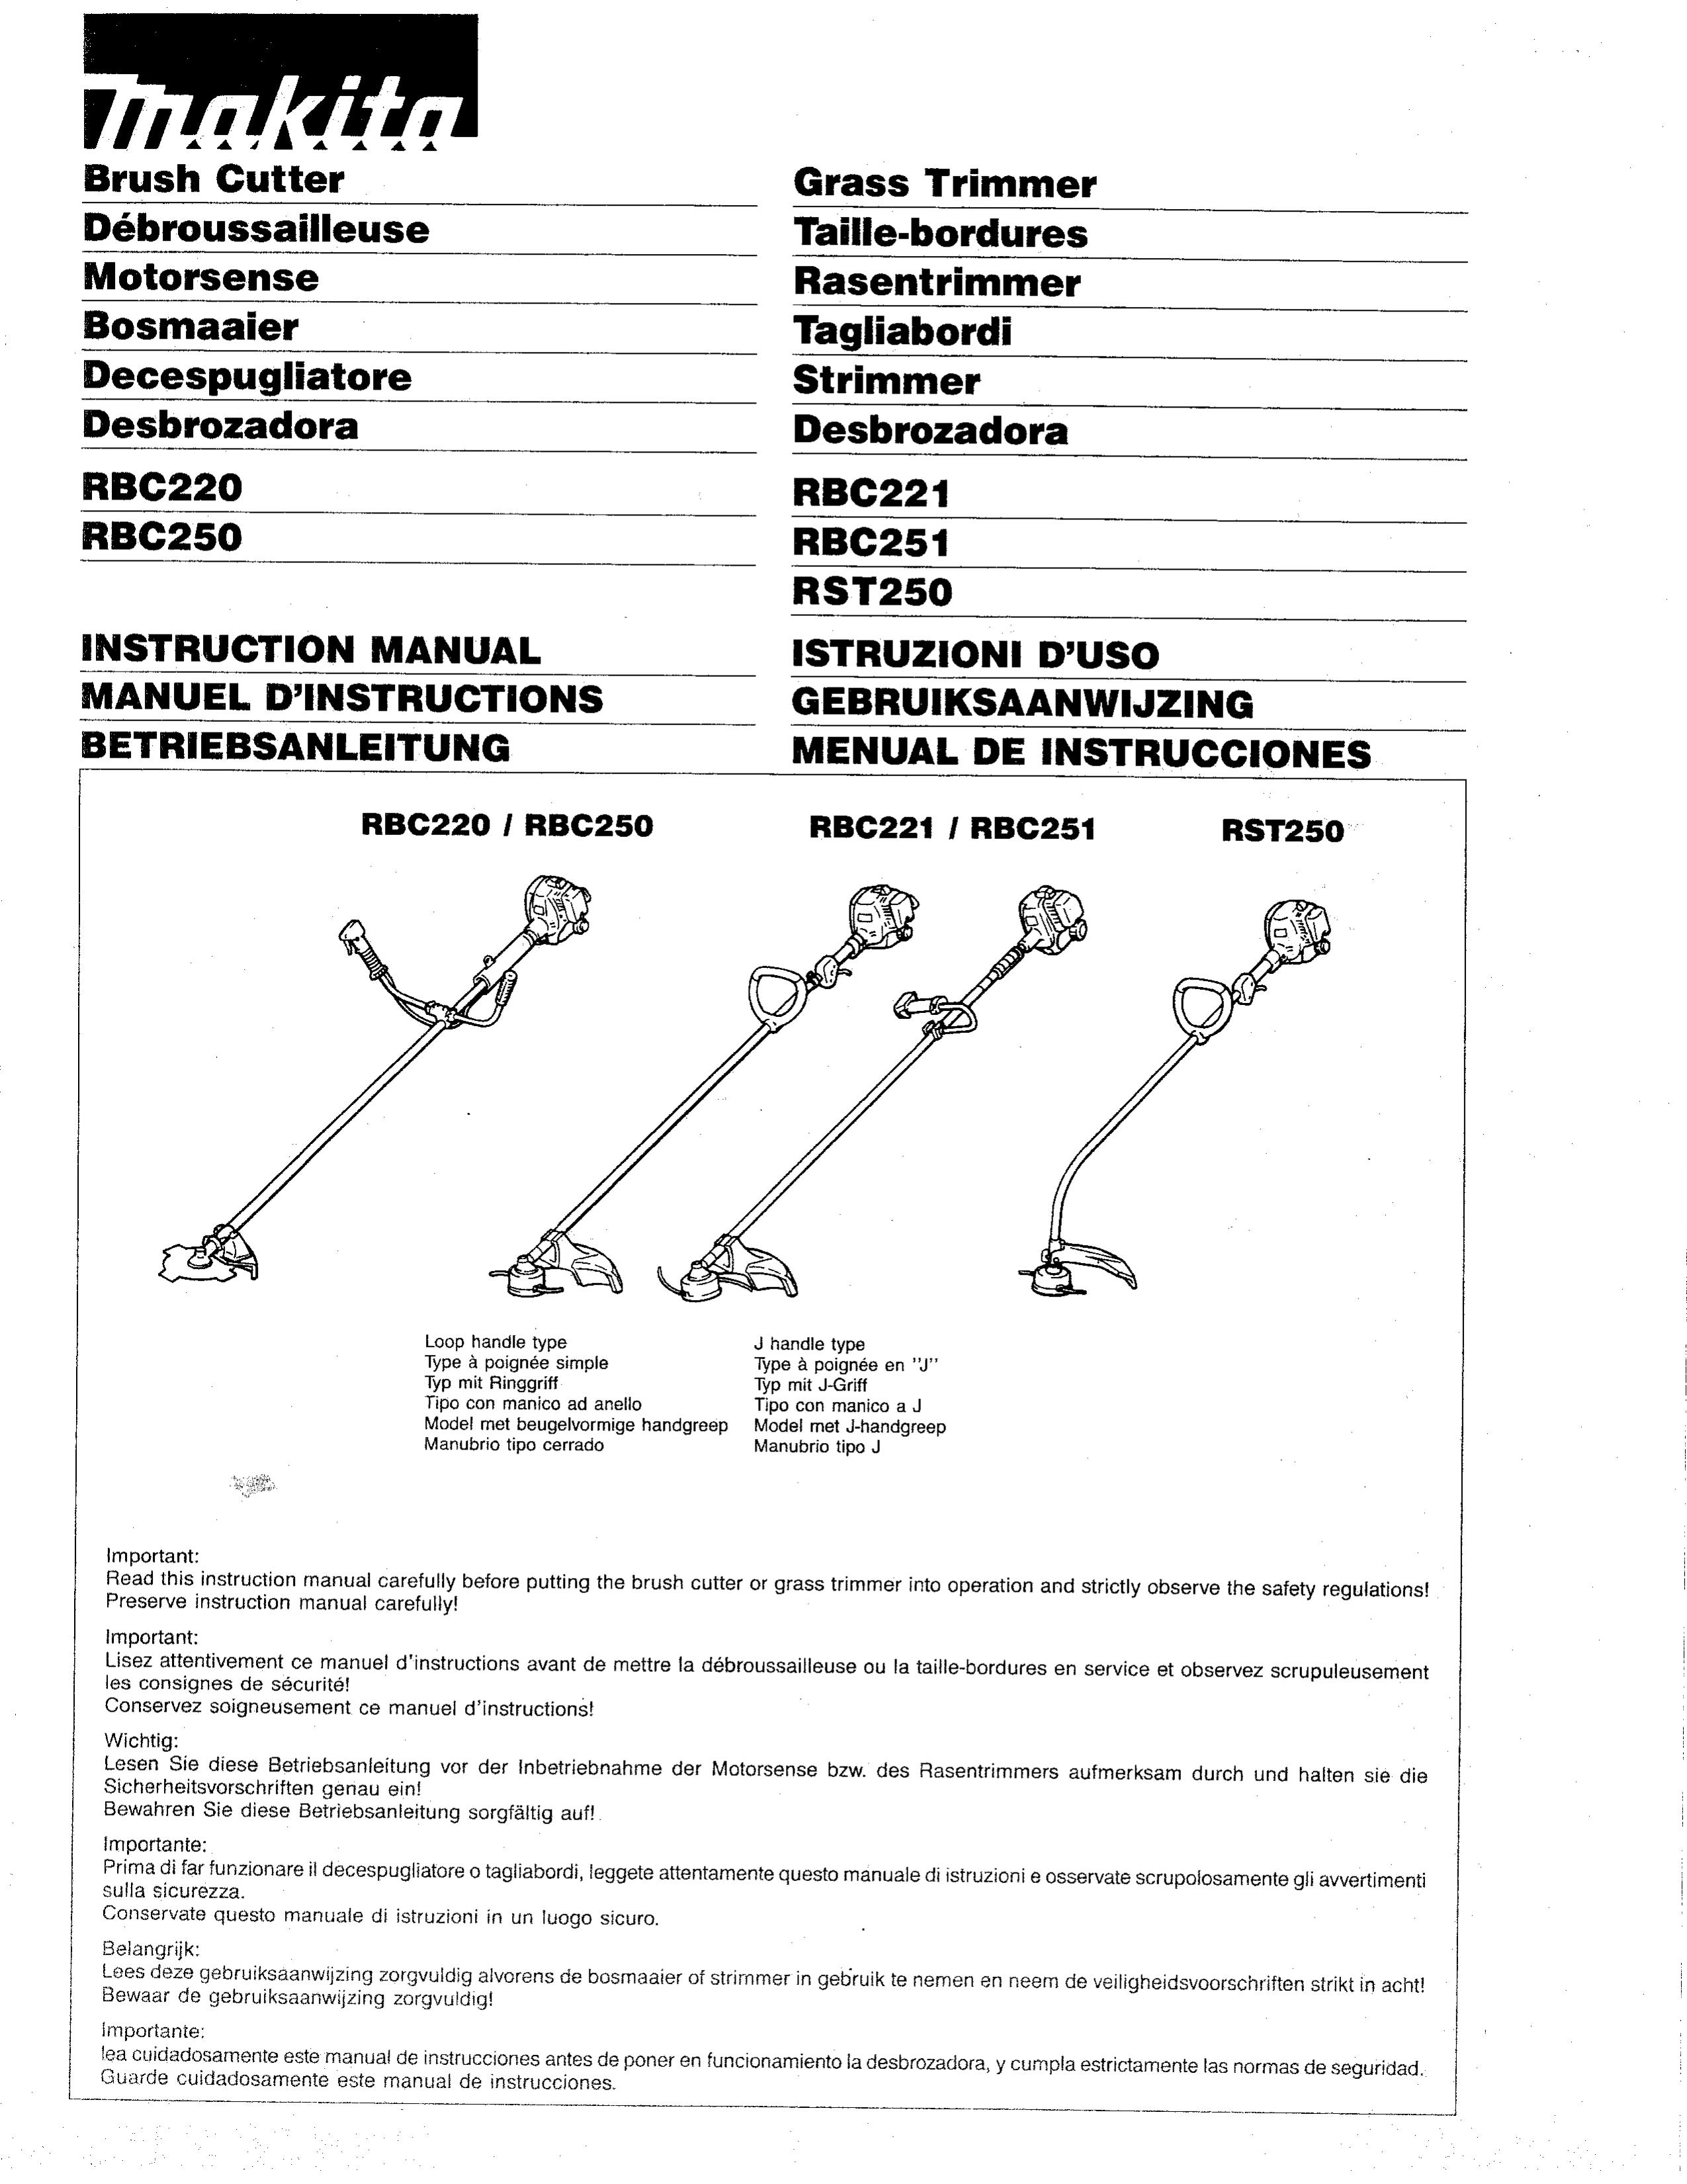 Makita RBC251 Brush Cutter User Manual